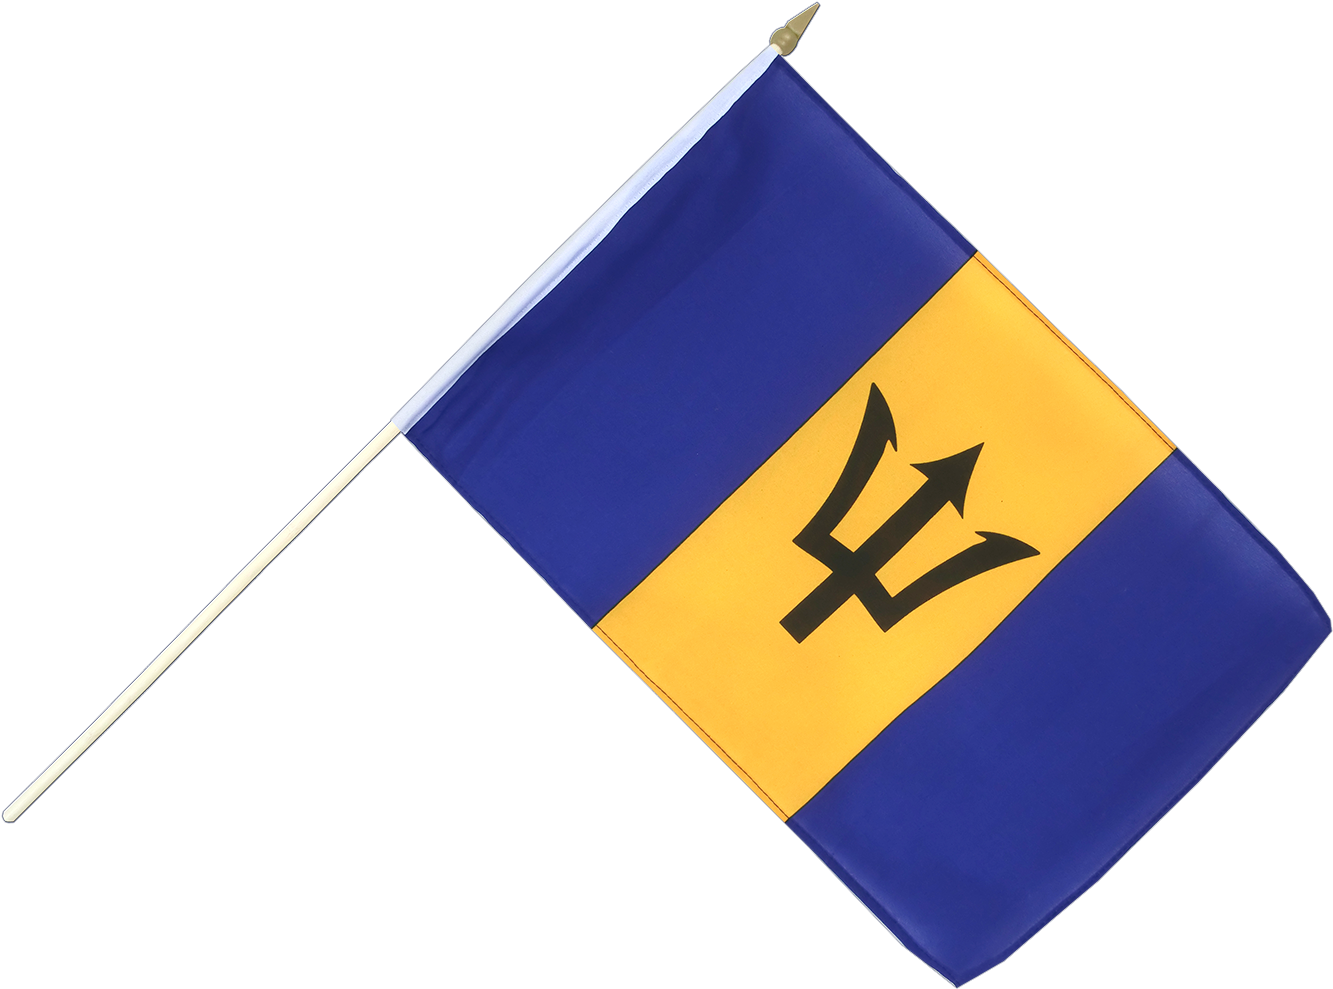 Barbados Flag PNG